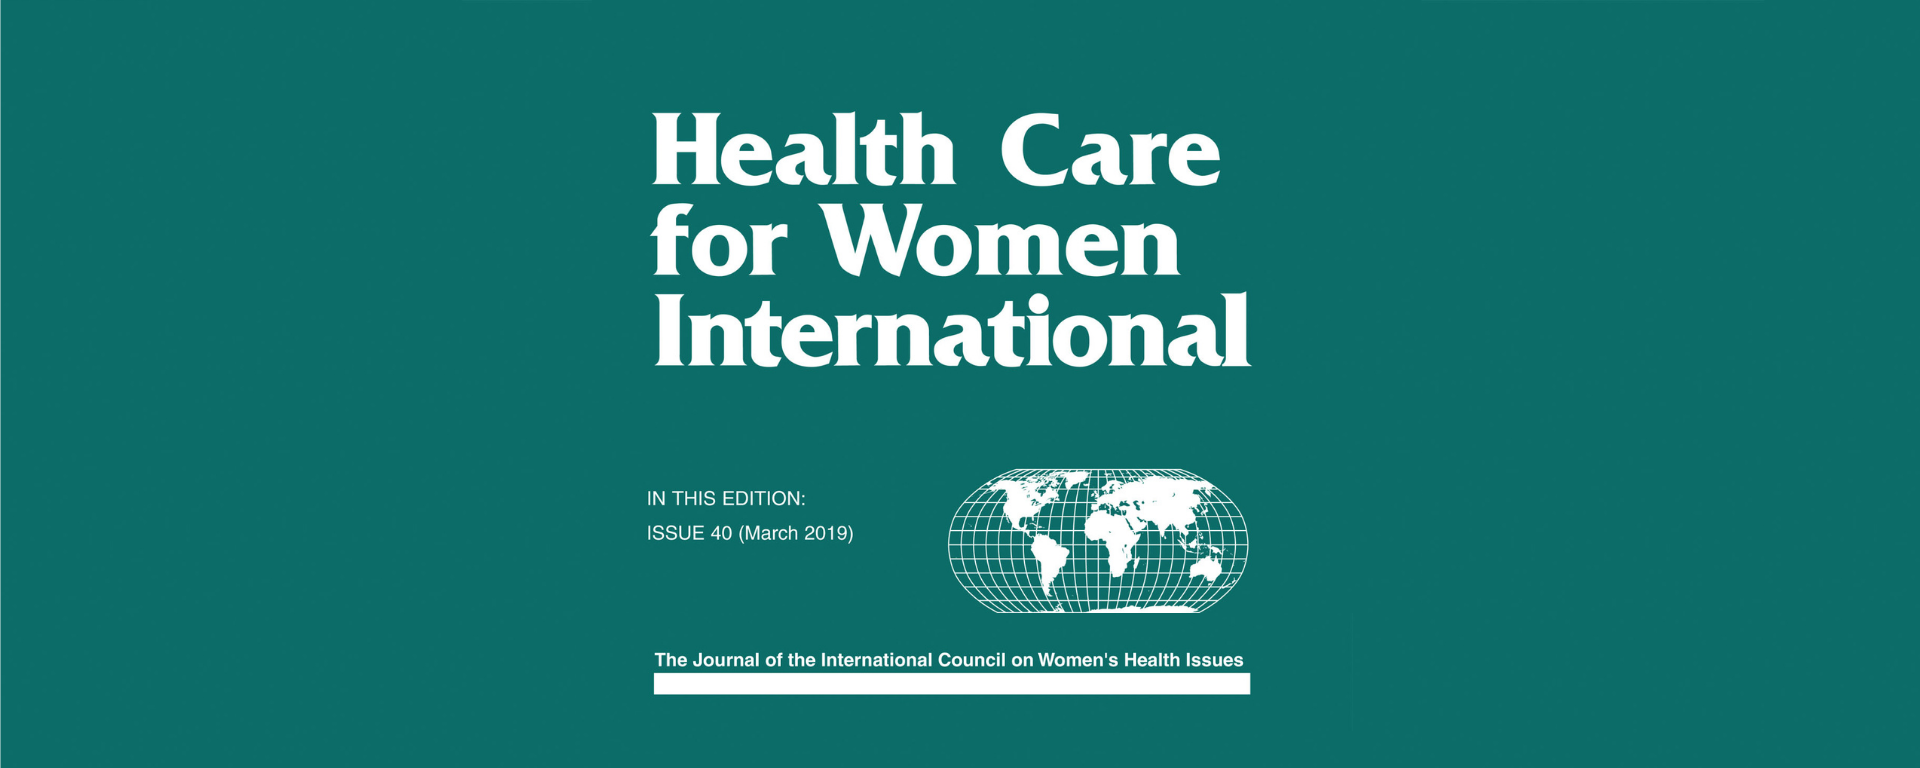 Revista Health Care for Women International